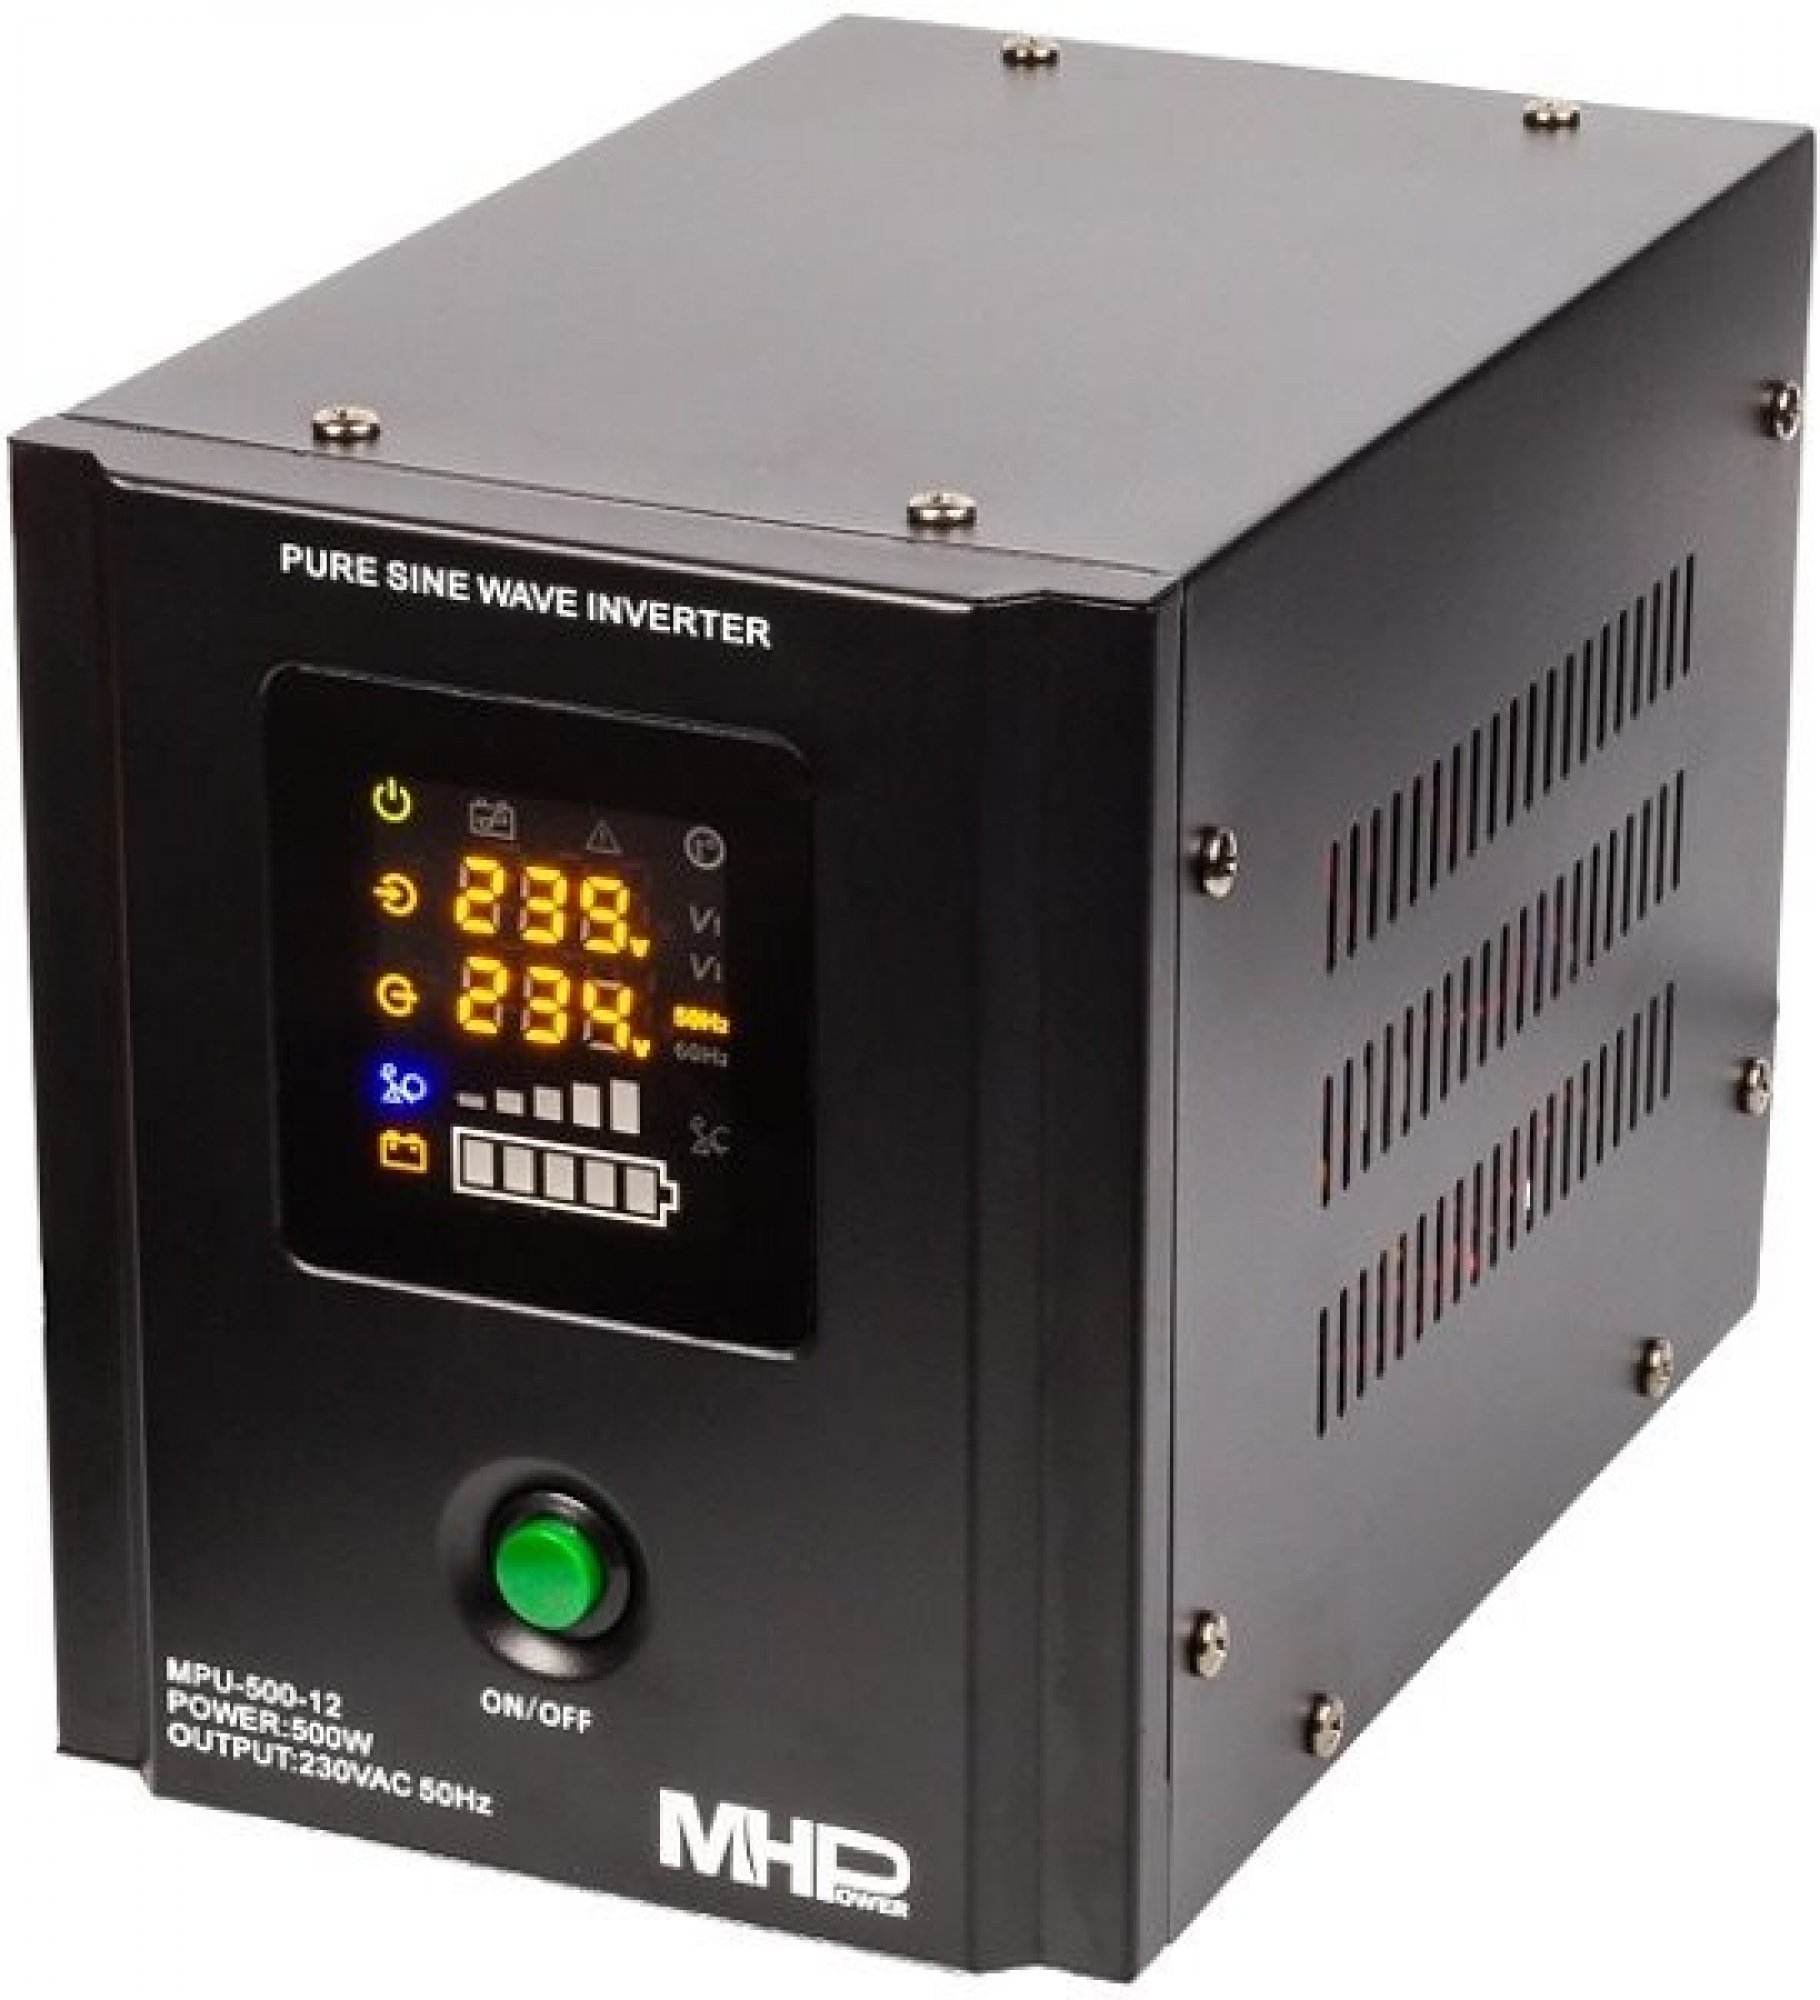 Backup power supply MHPower MPU-1600-12, UPS, 1600W, pure sine, 12V